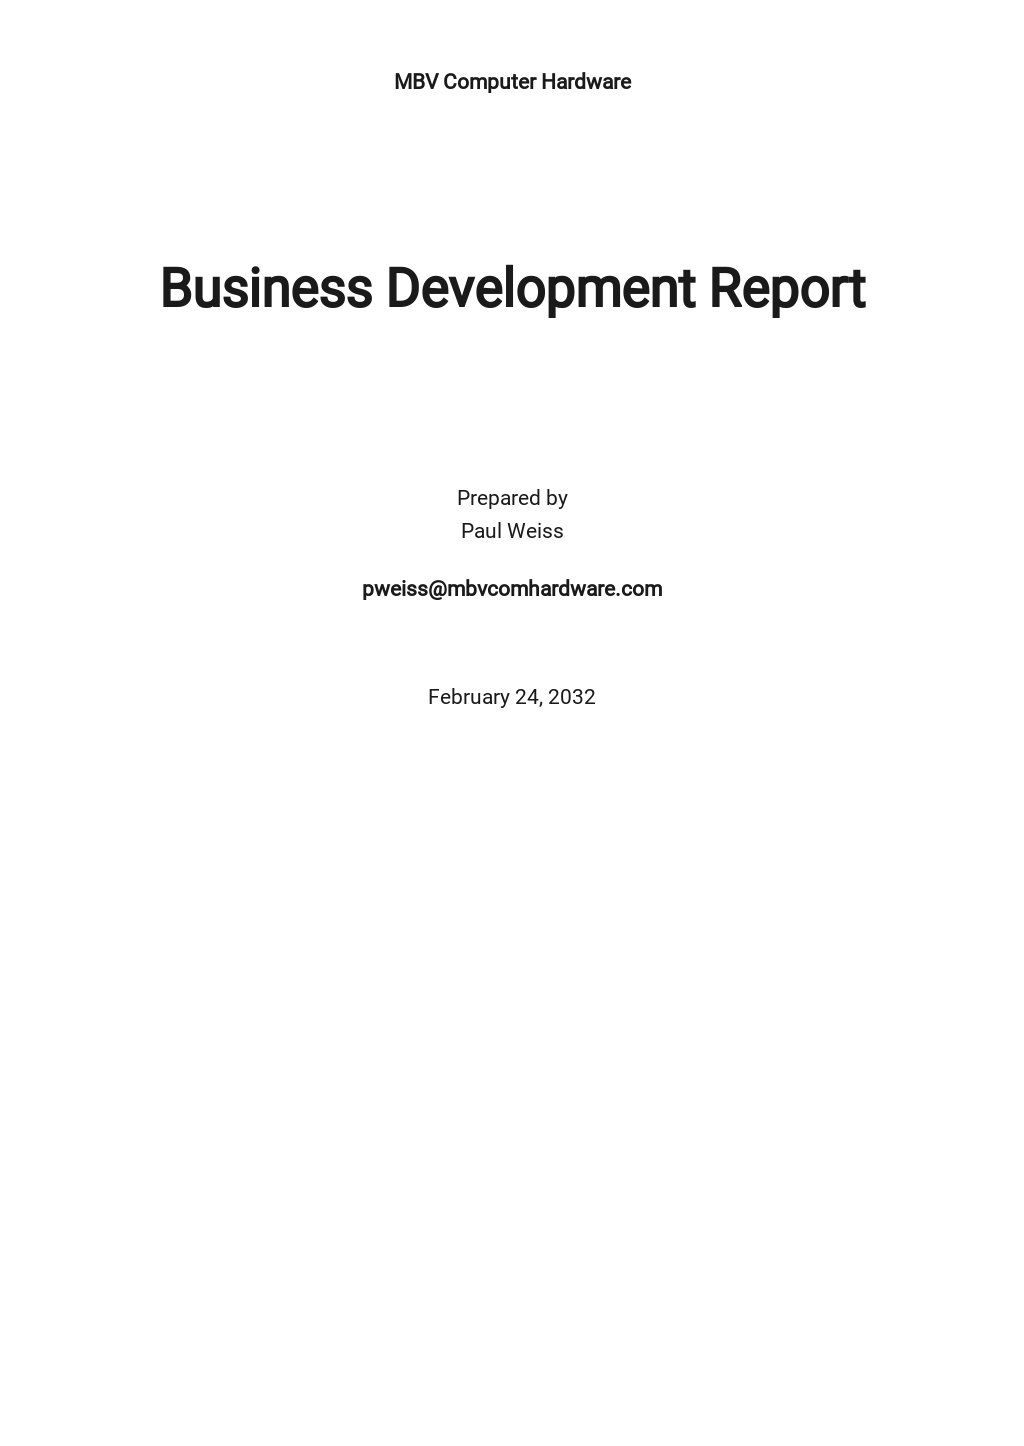 Business Development Report Template.jpe